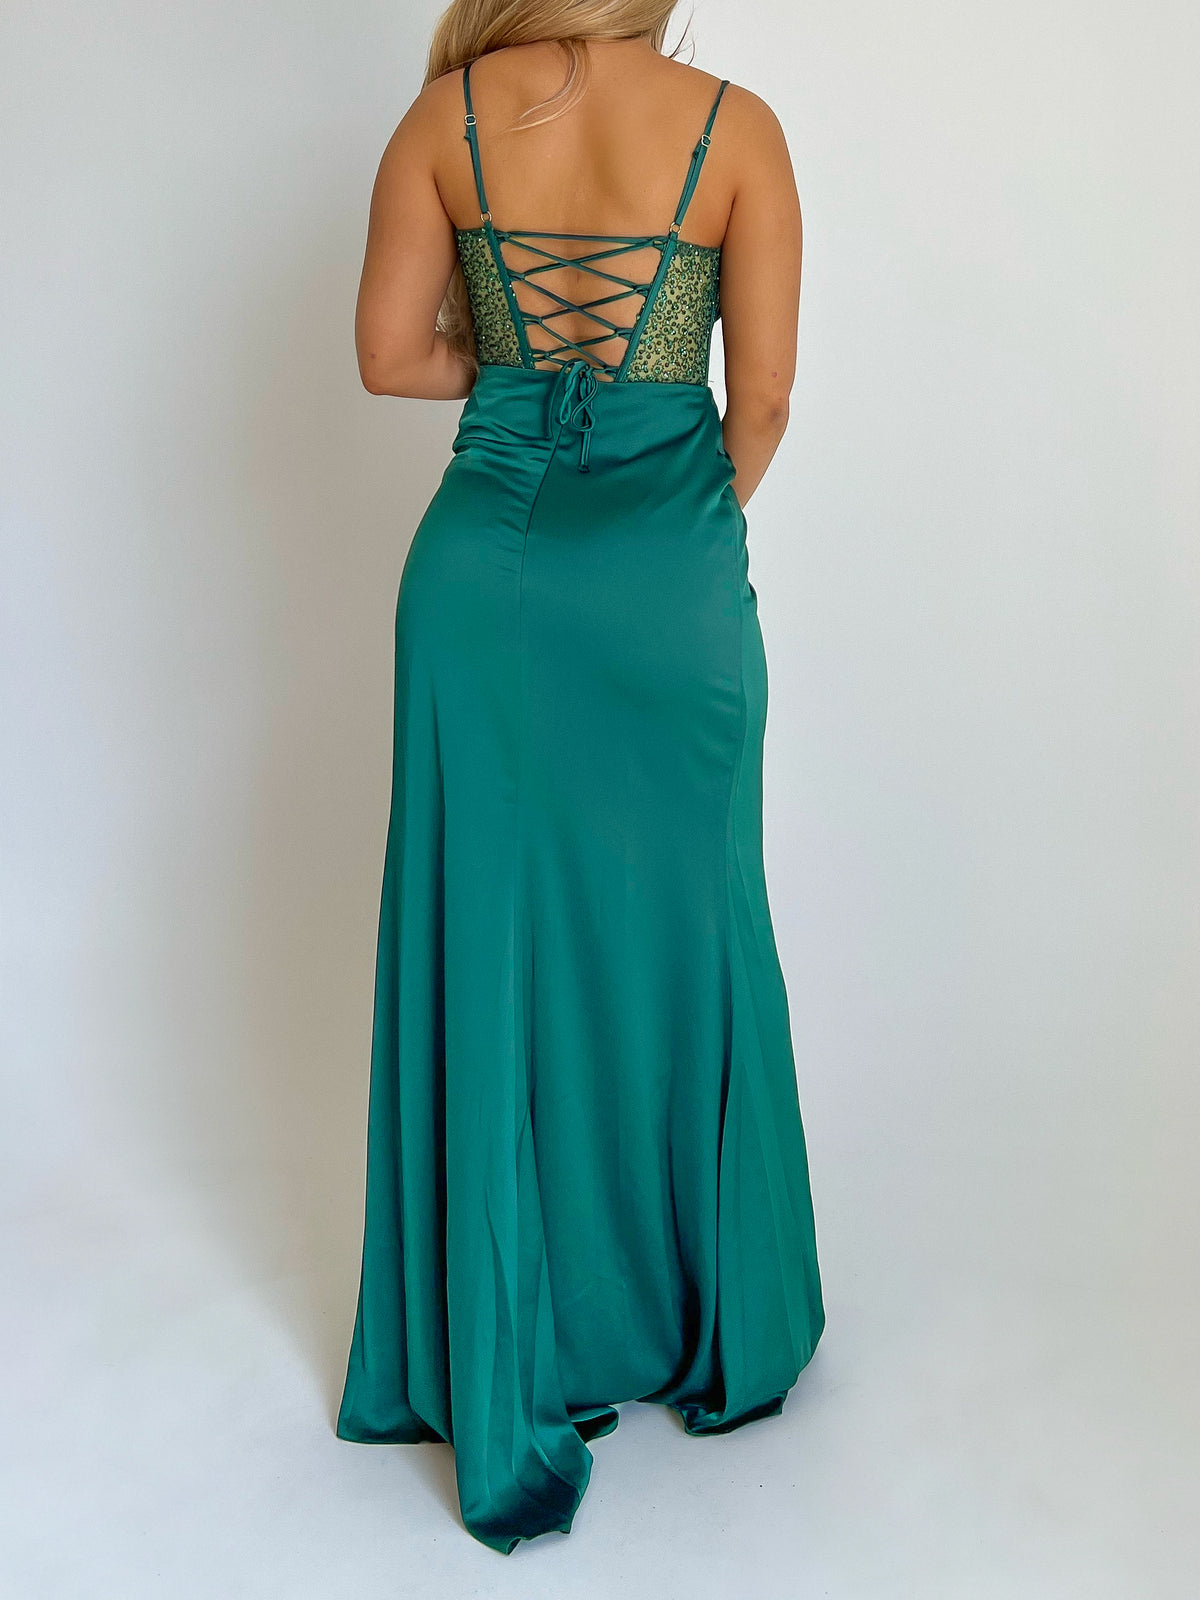 Alexis Dress (Emerald)